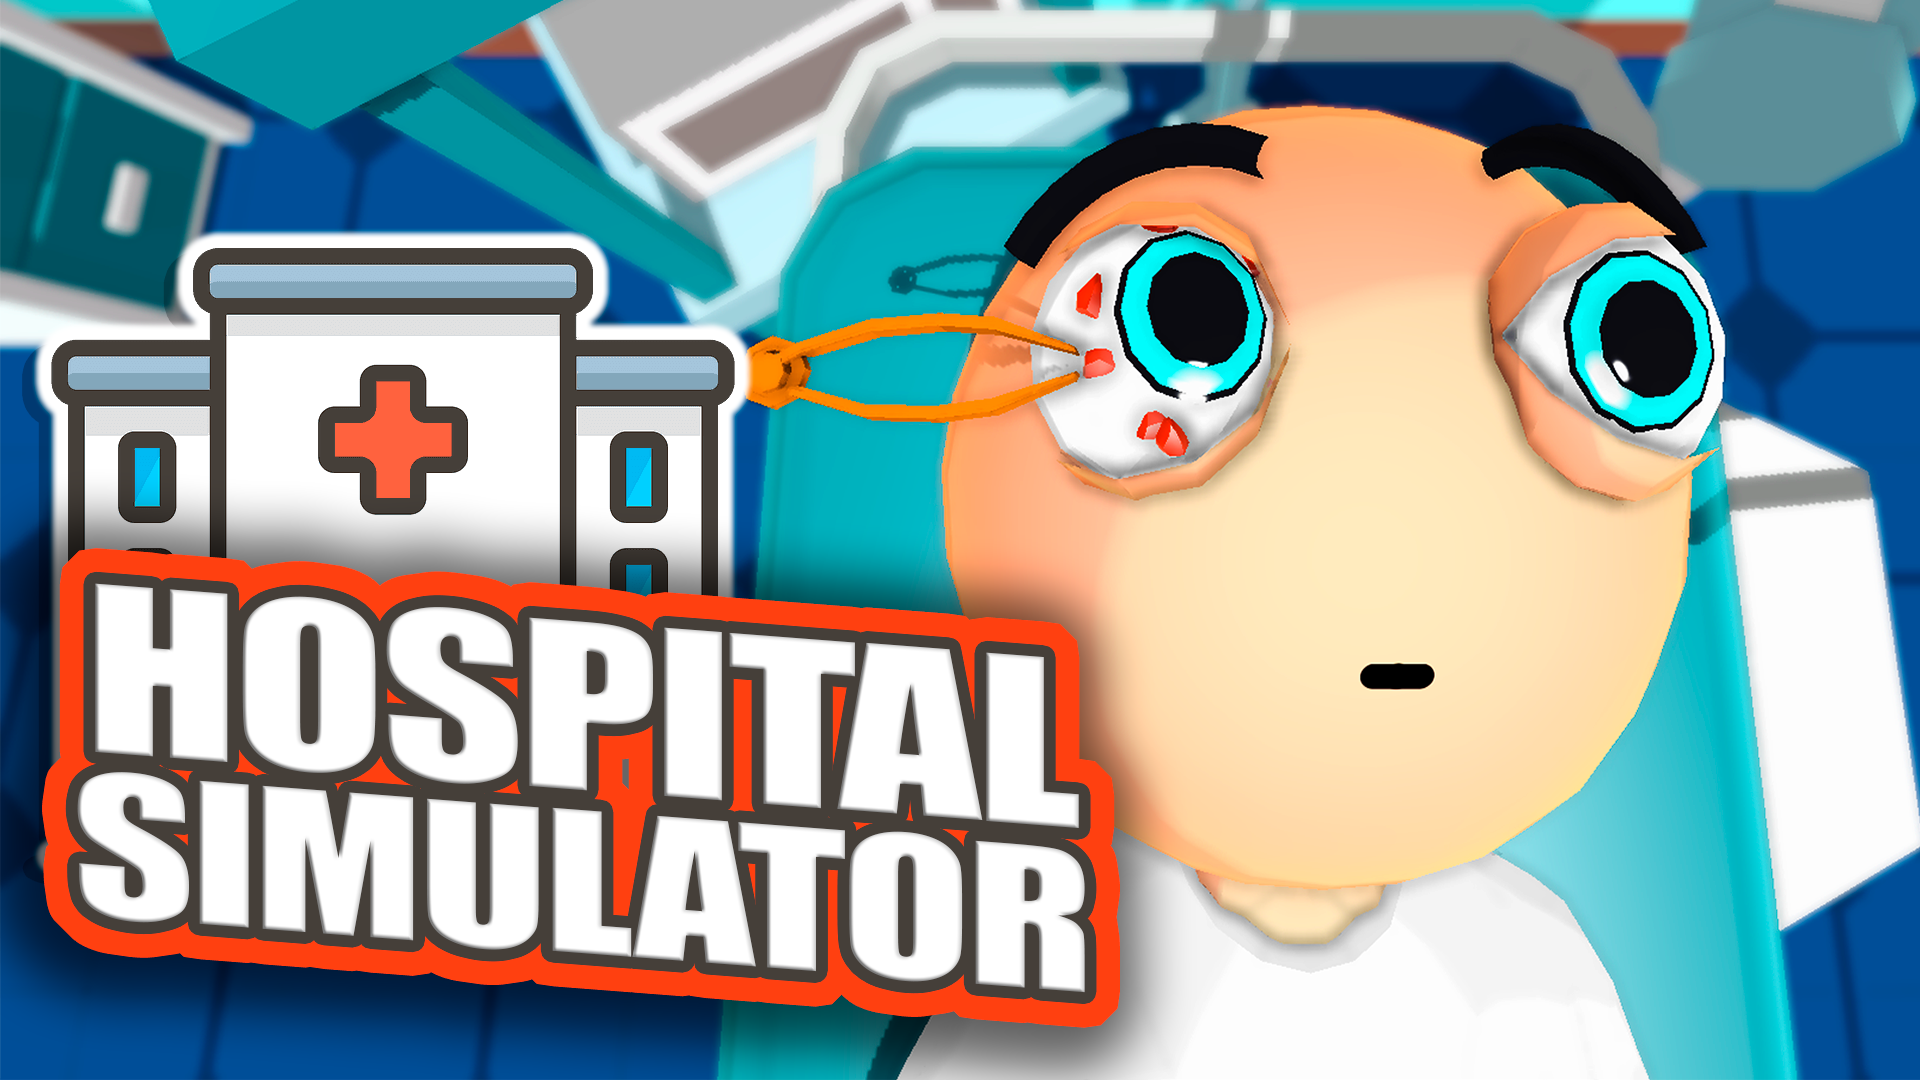 Hospital Simulator Game Image